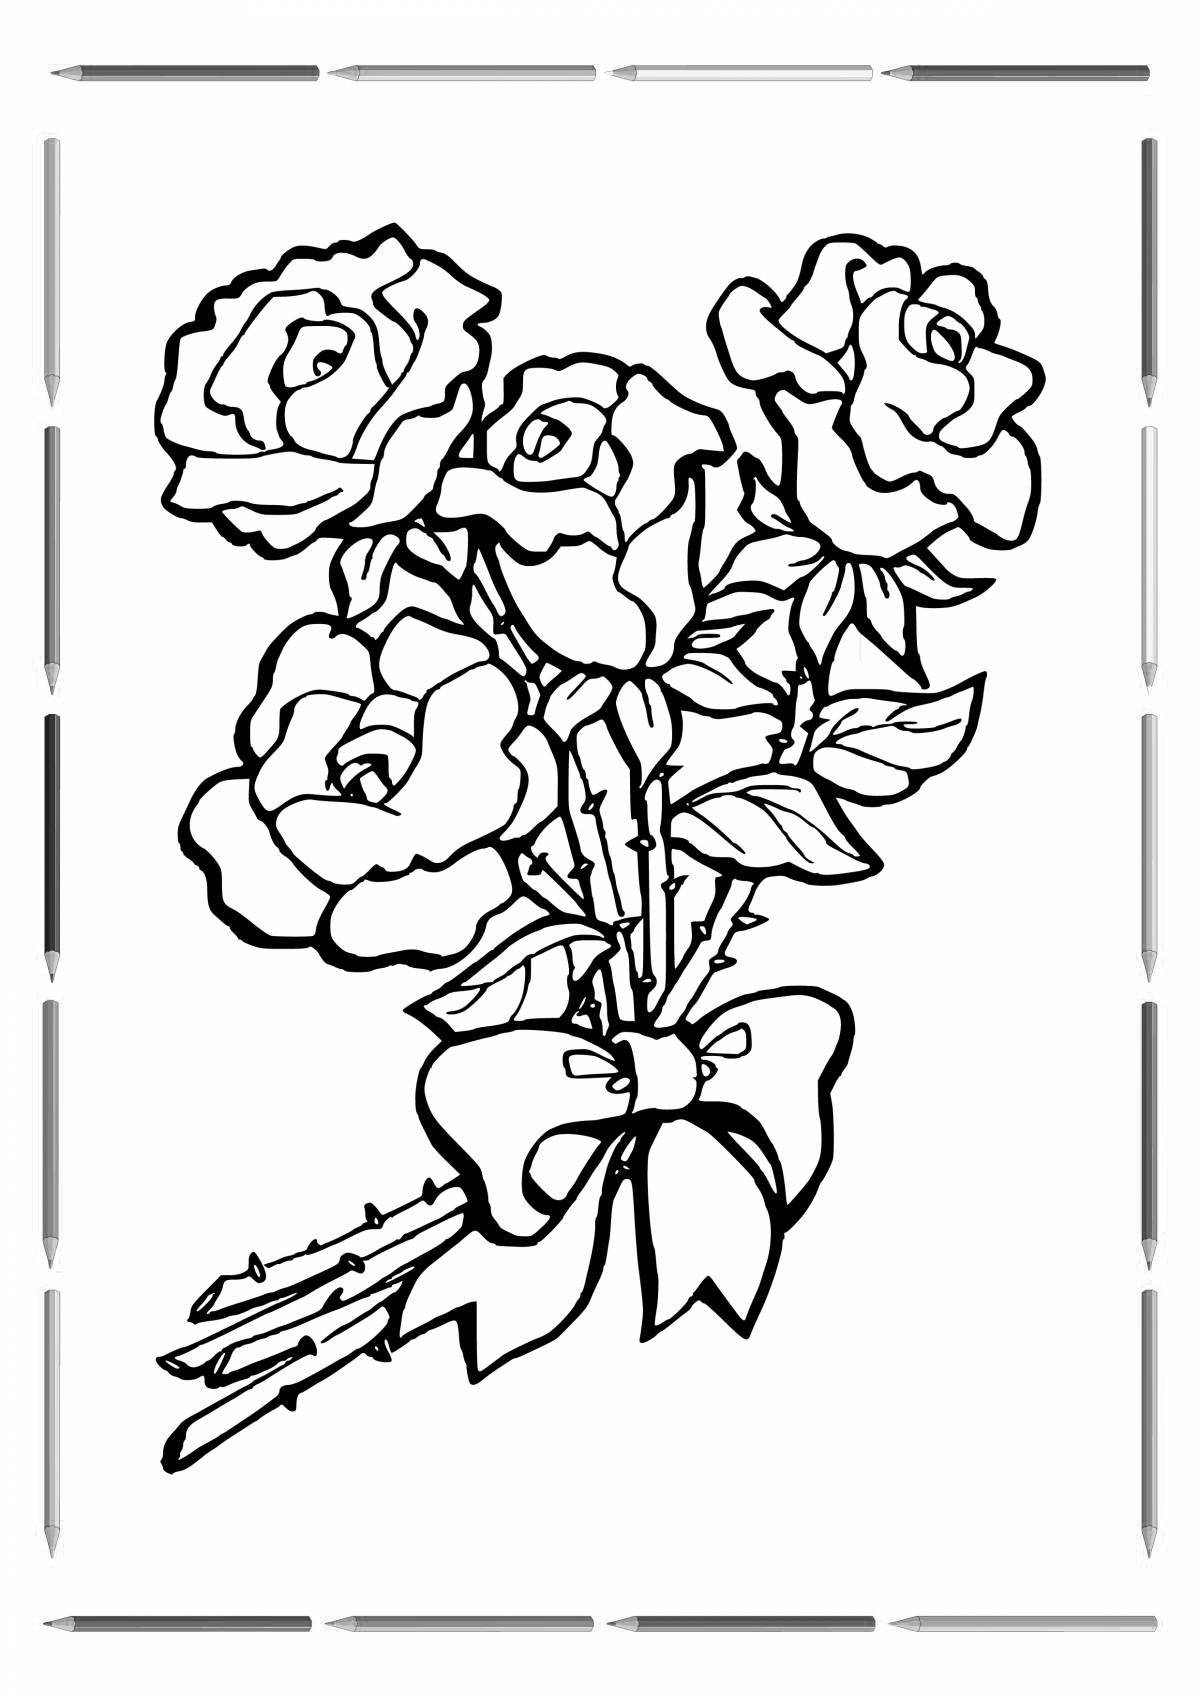 Happy birthday rose coloring book